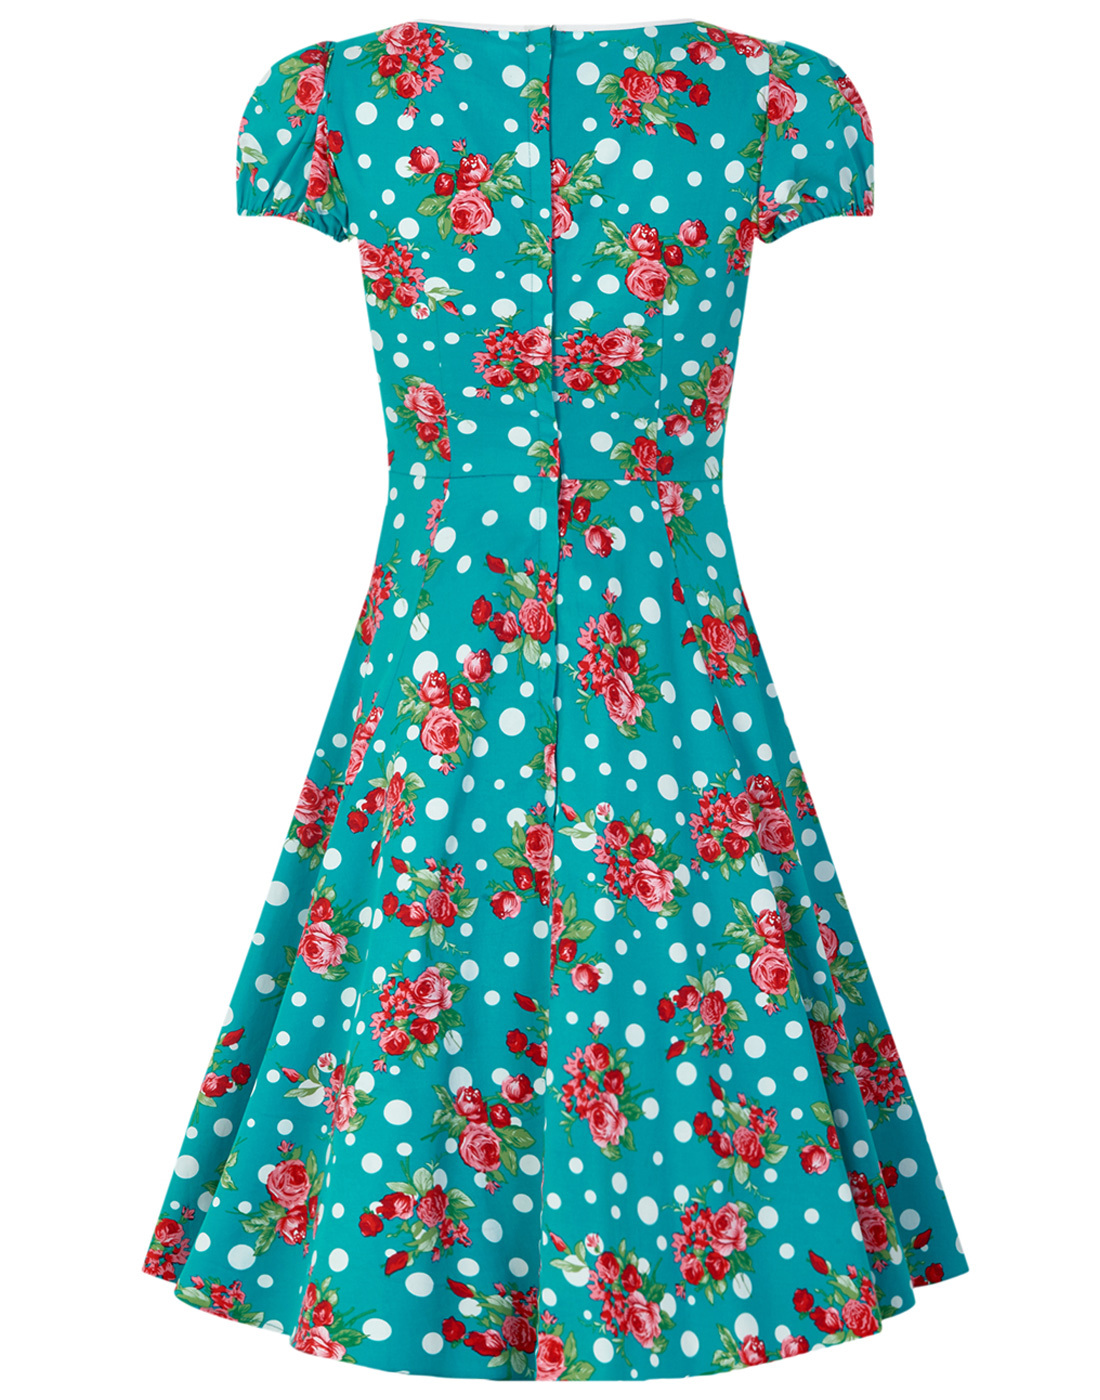 COLLECTIF Mimi Retro Polka Dot Floral Doll Dress in Jade